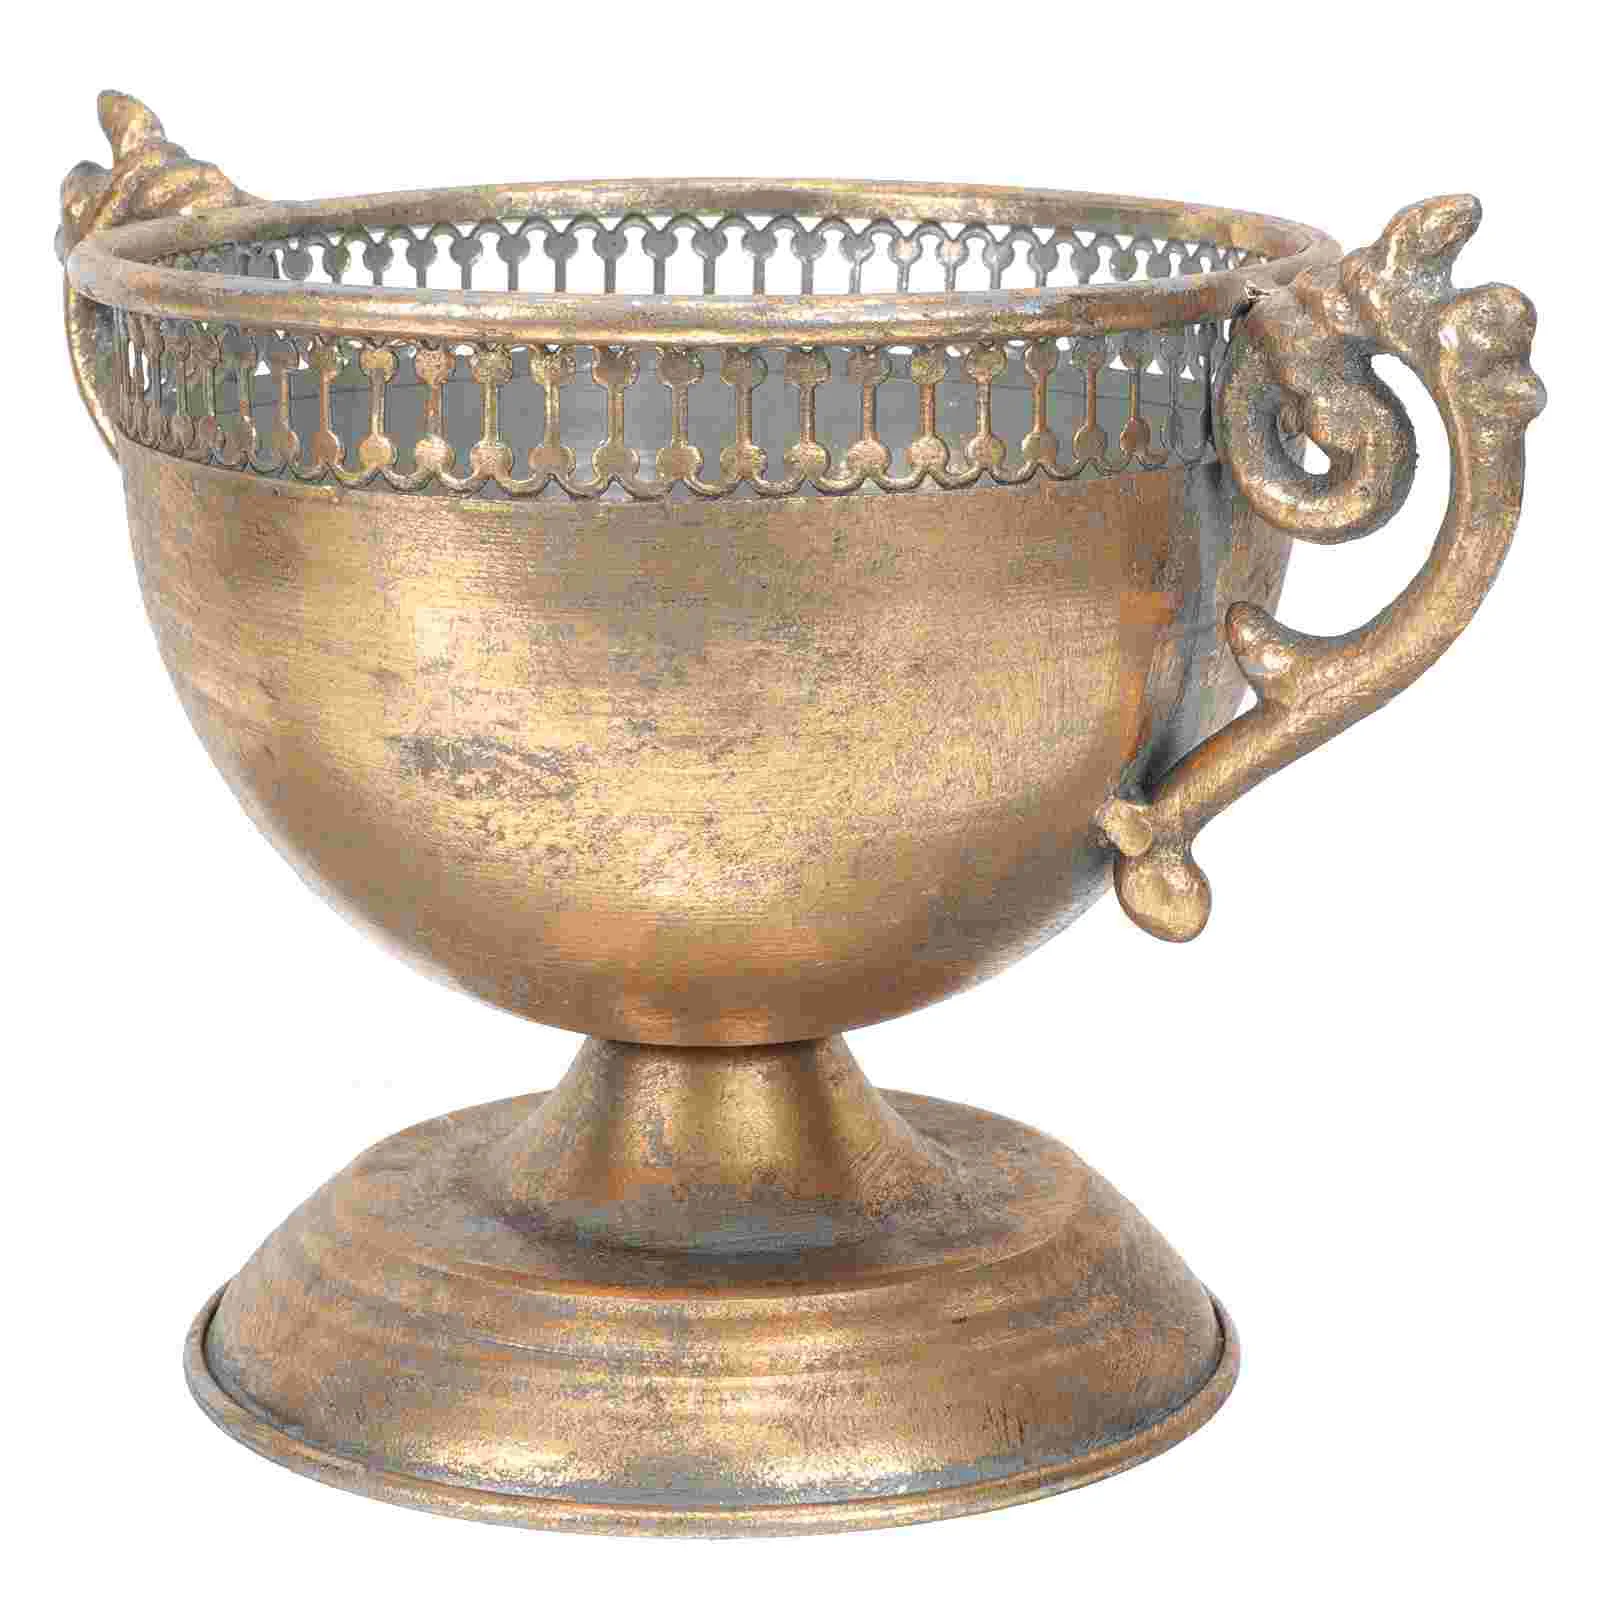 

Planter Vintage Flowerpot Office Trendy Home Decor Rustic Vase Iron Metal Vases Gold